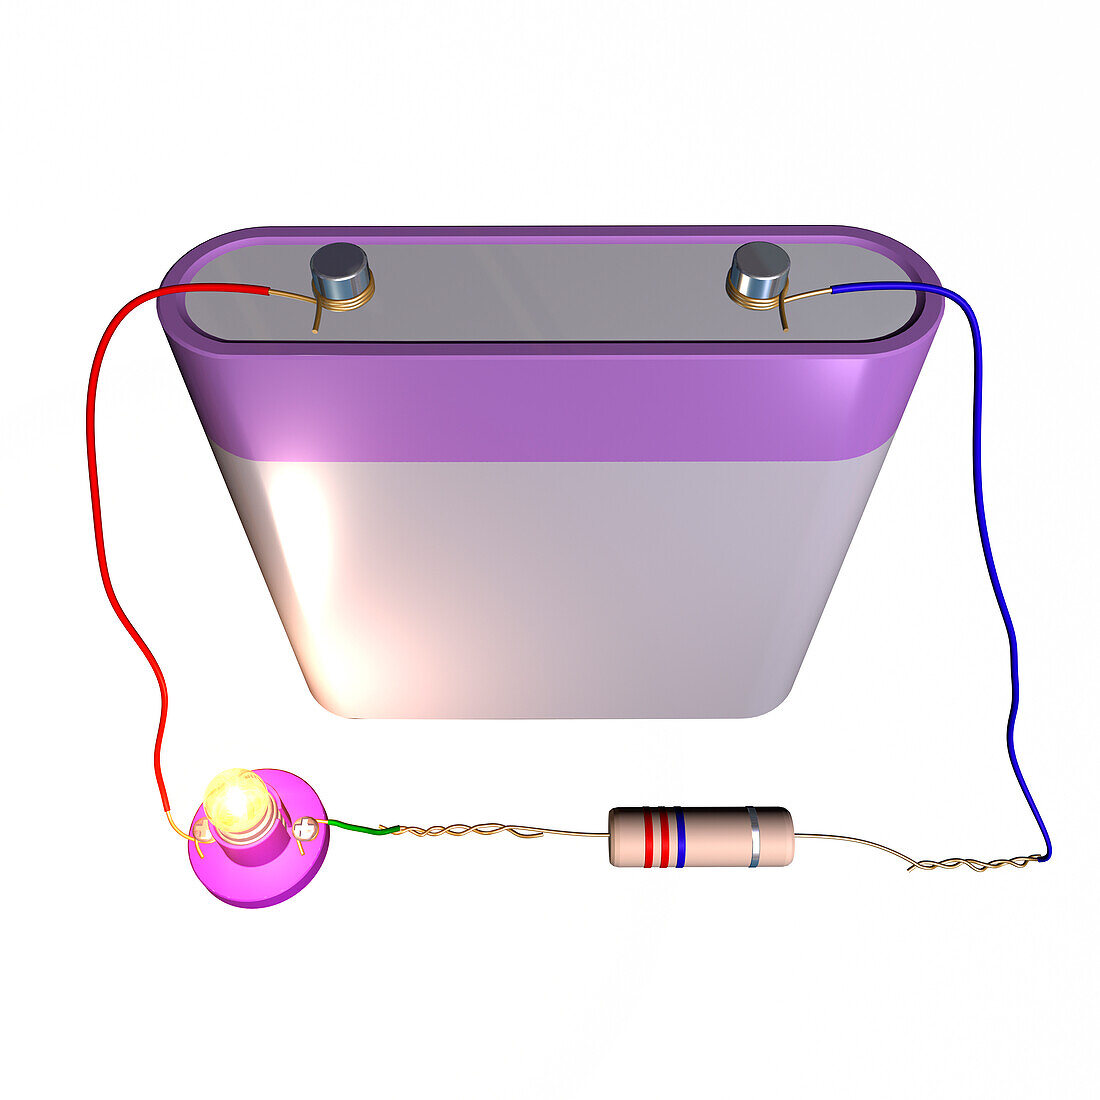 Resistor circuit with illuminated light bulb, illustration